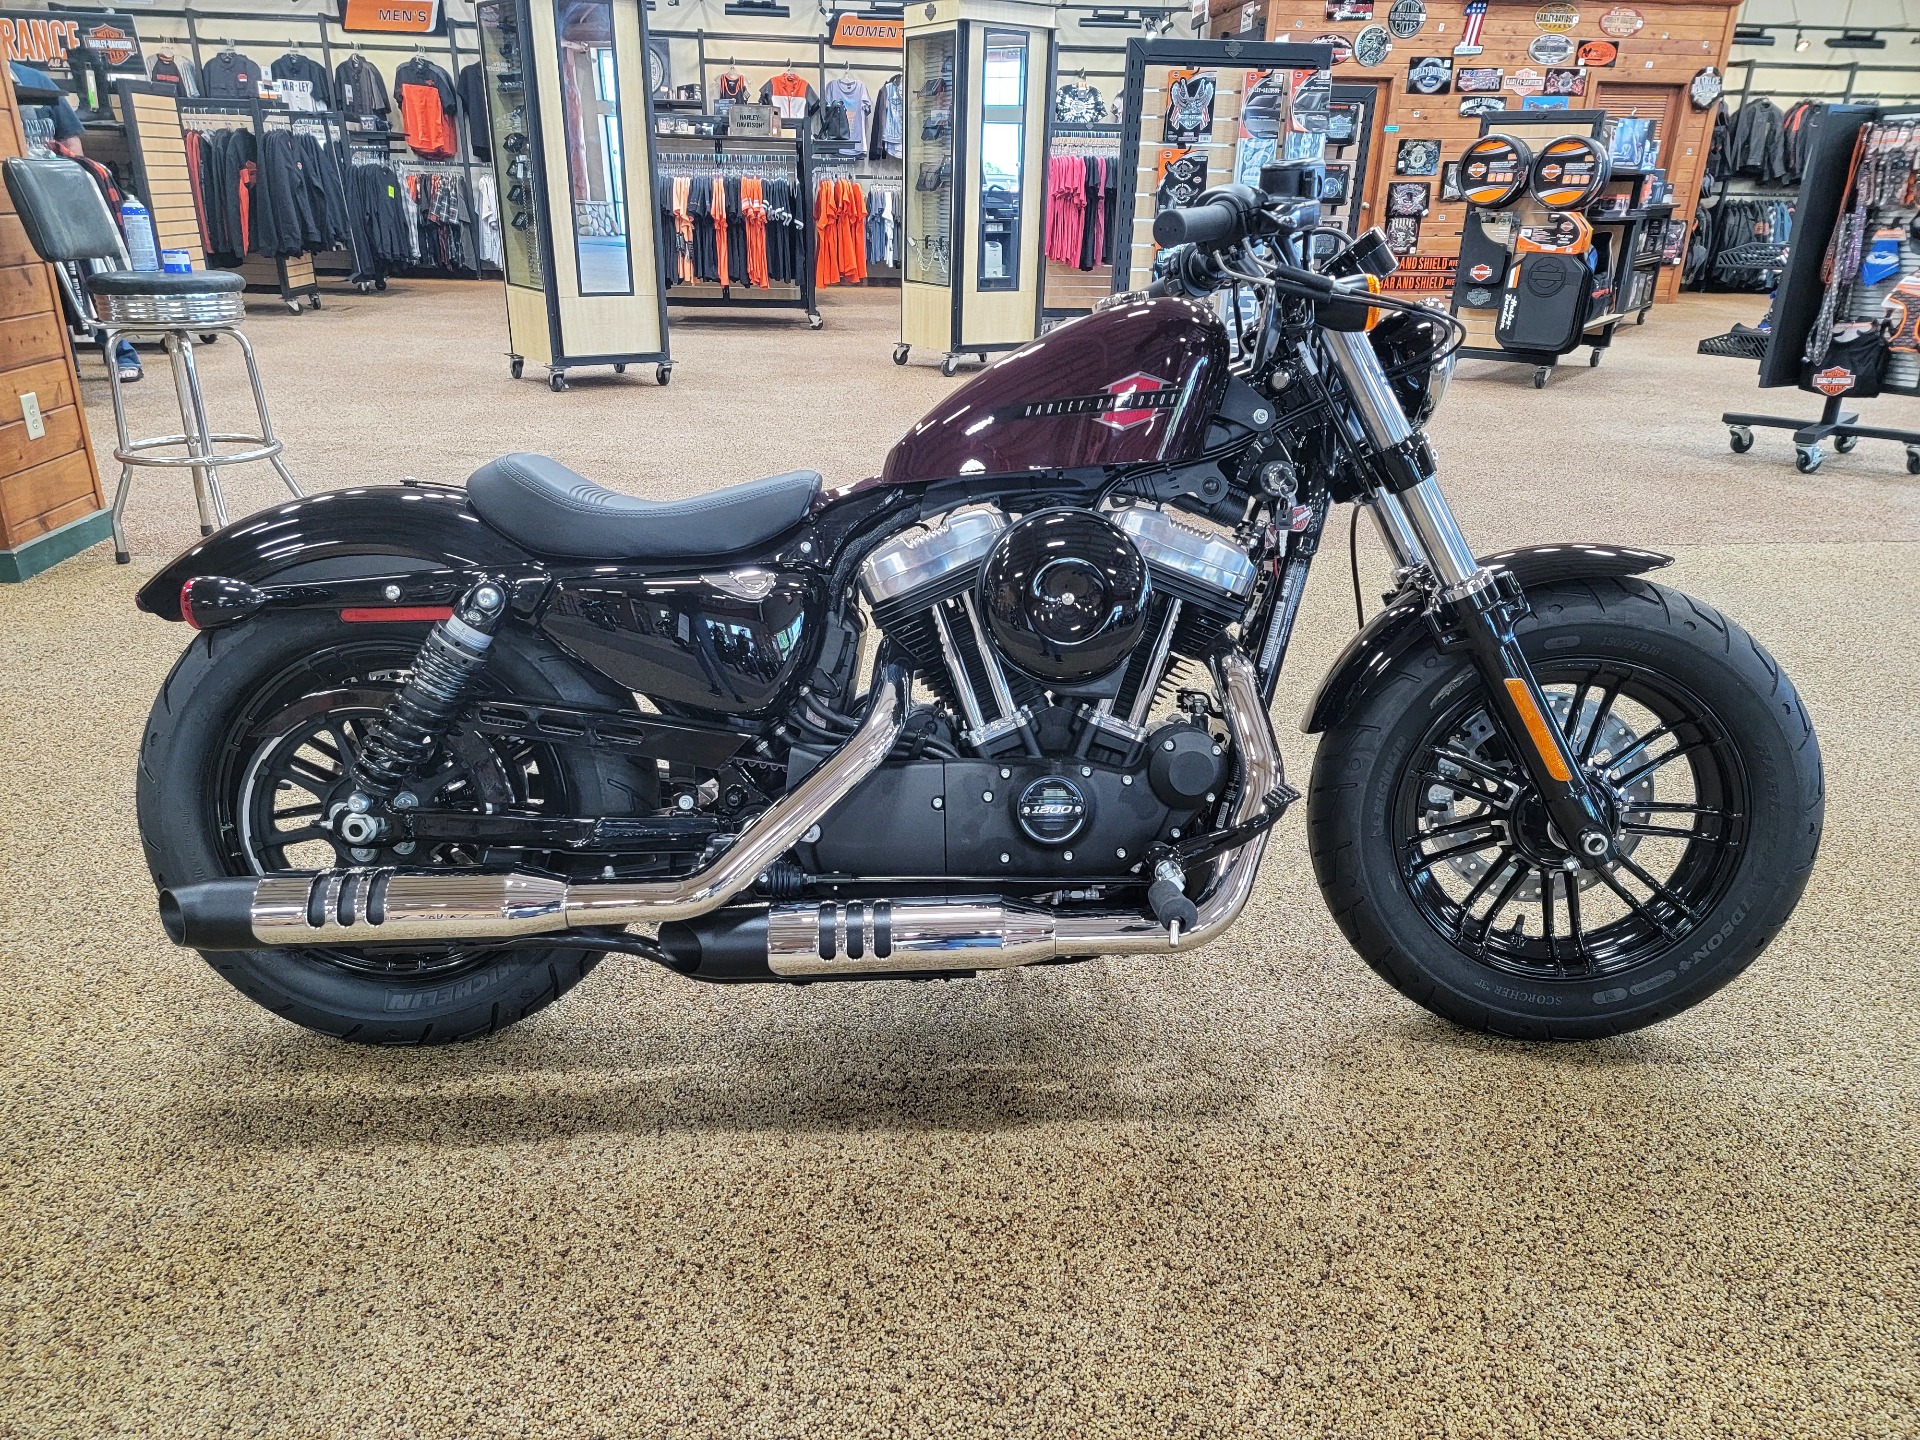 New 2021 Harley Davidson Forty Eight Midnight Crimson Motorcycles In Sauk Rapids Mn Xl406688